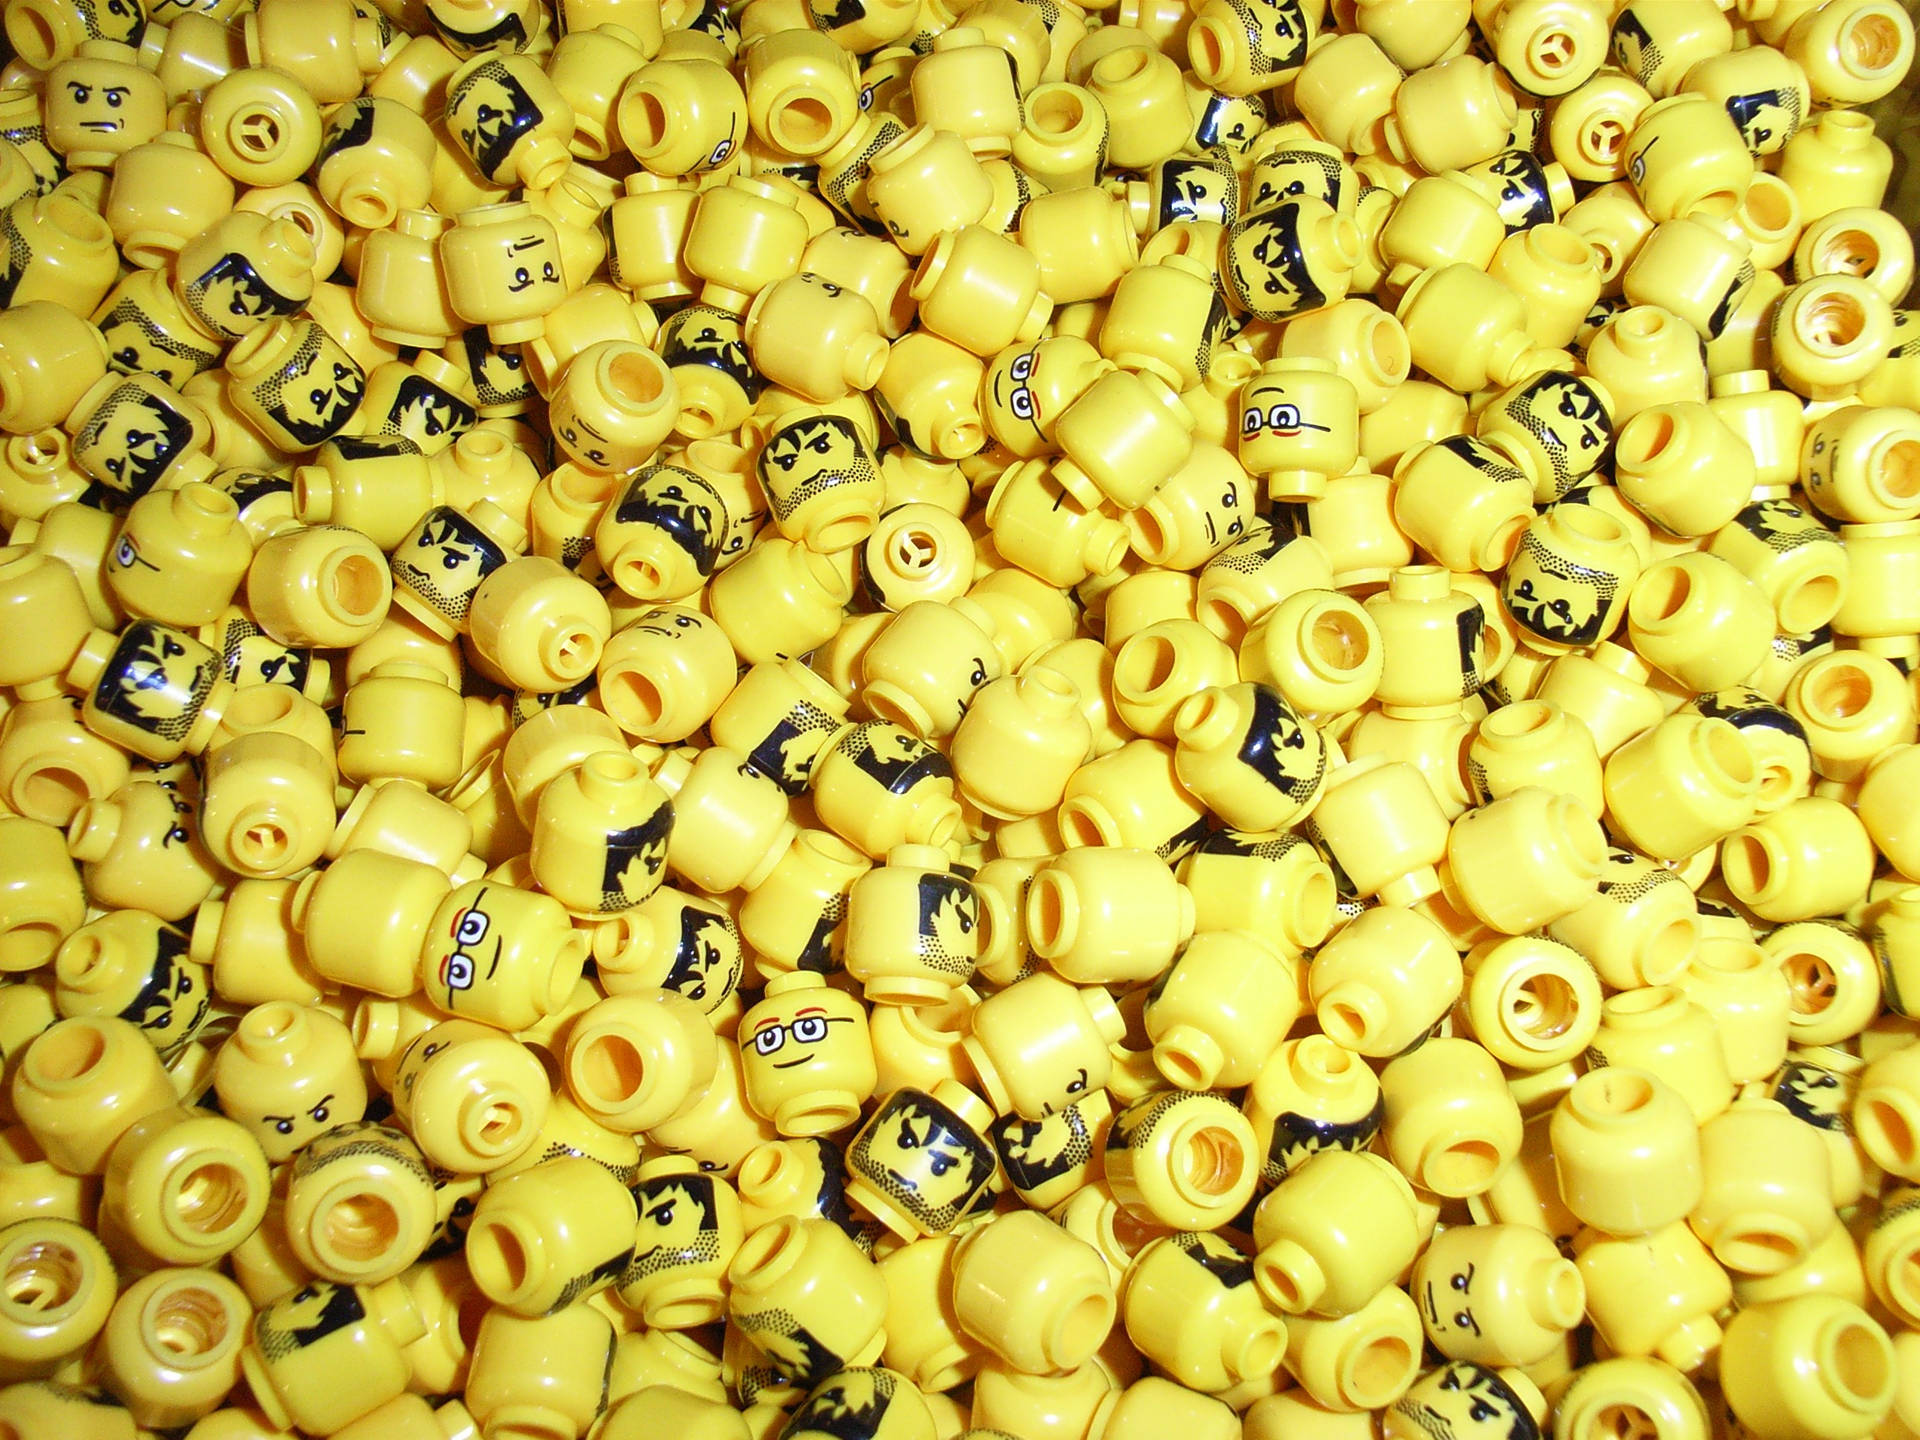 Yellow Hd Lego Heads Wallpaper